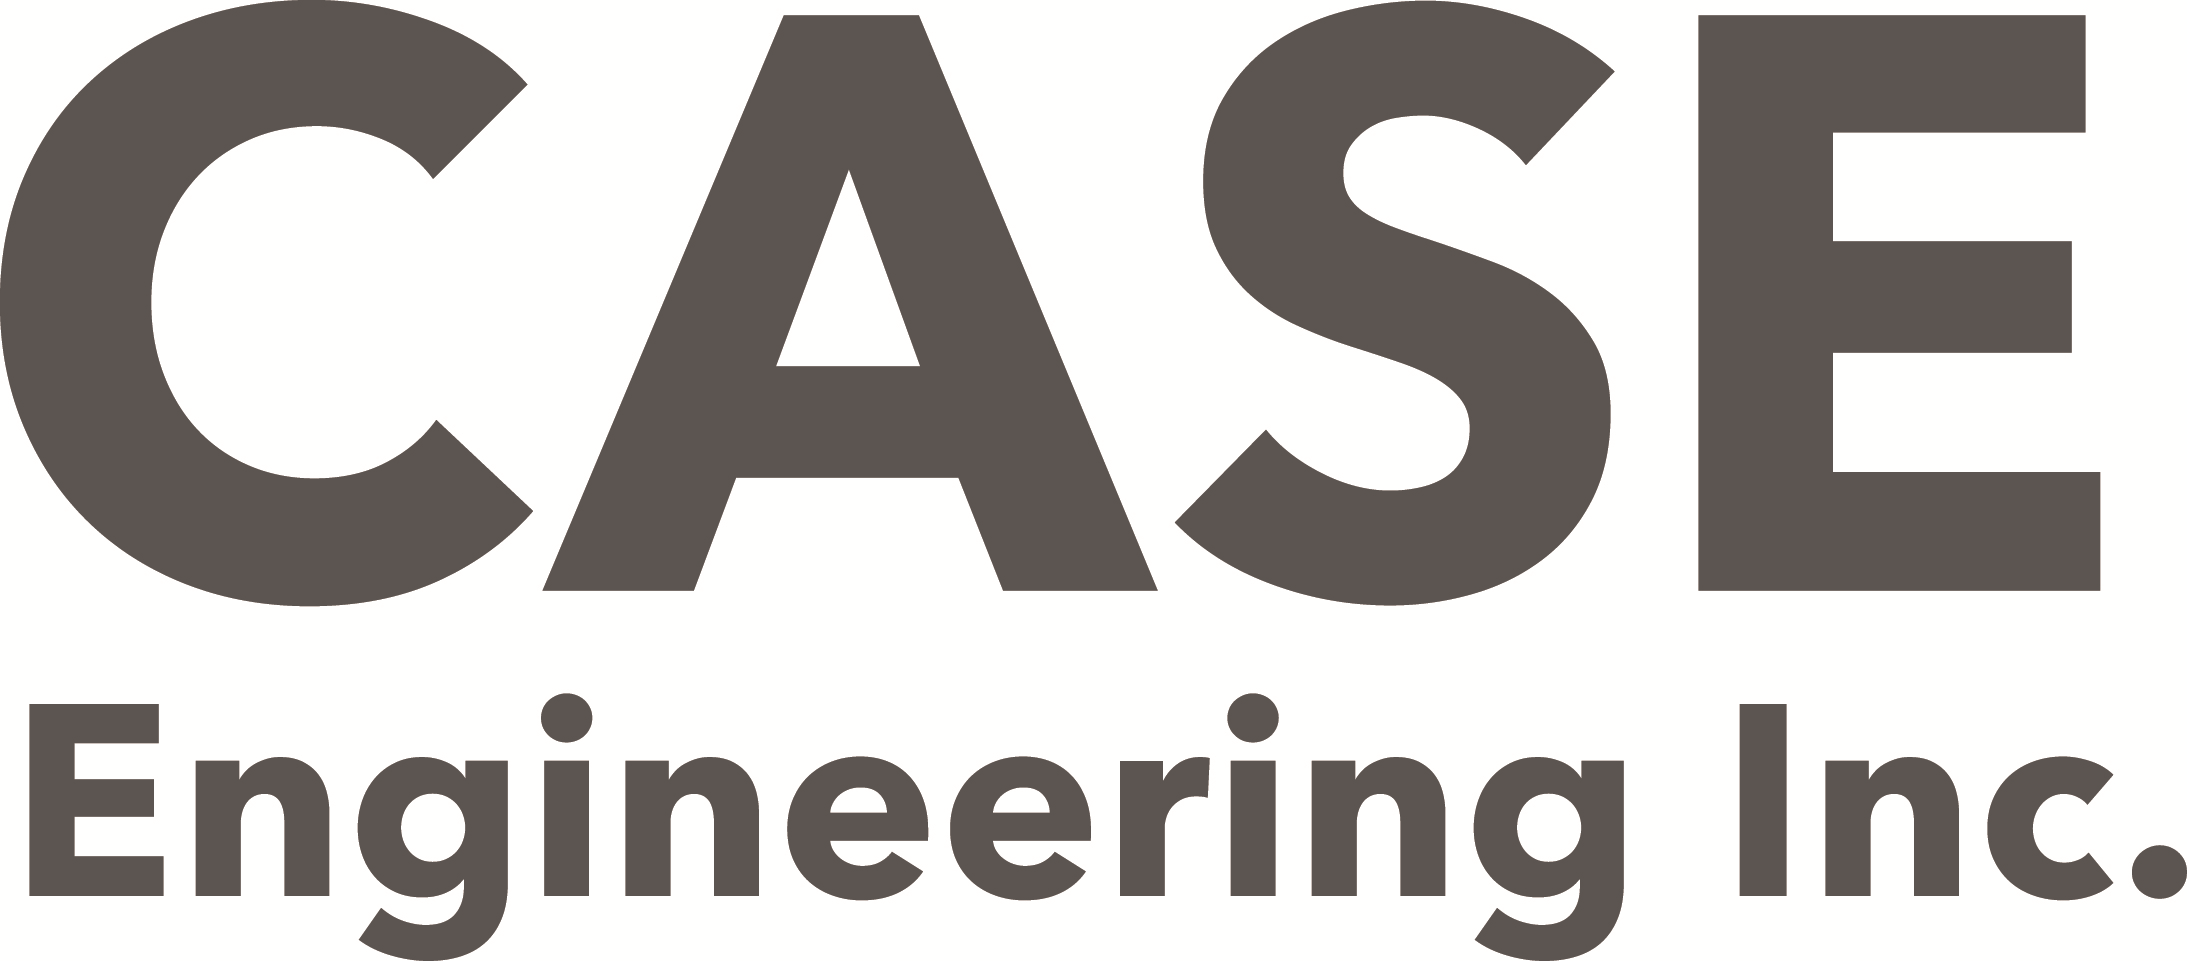 Case Engineering, Inc. logo